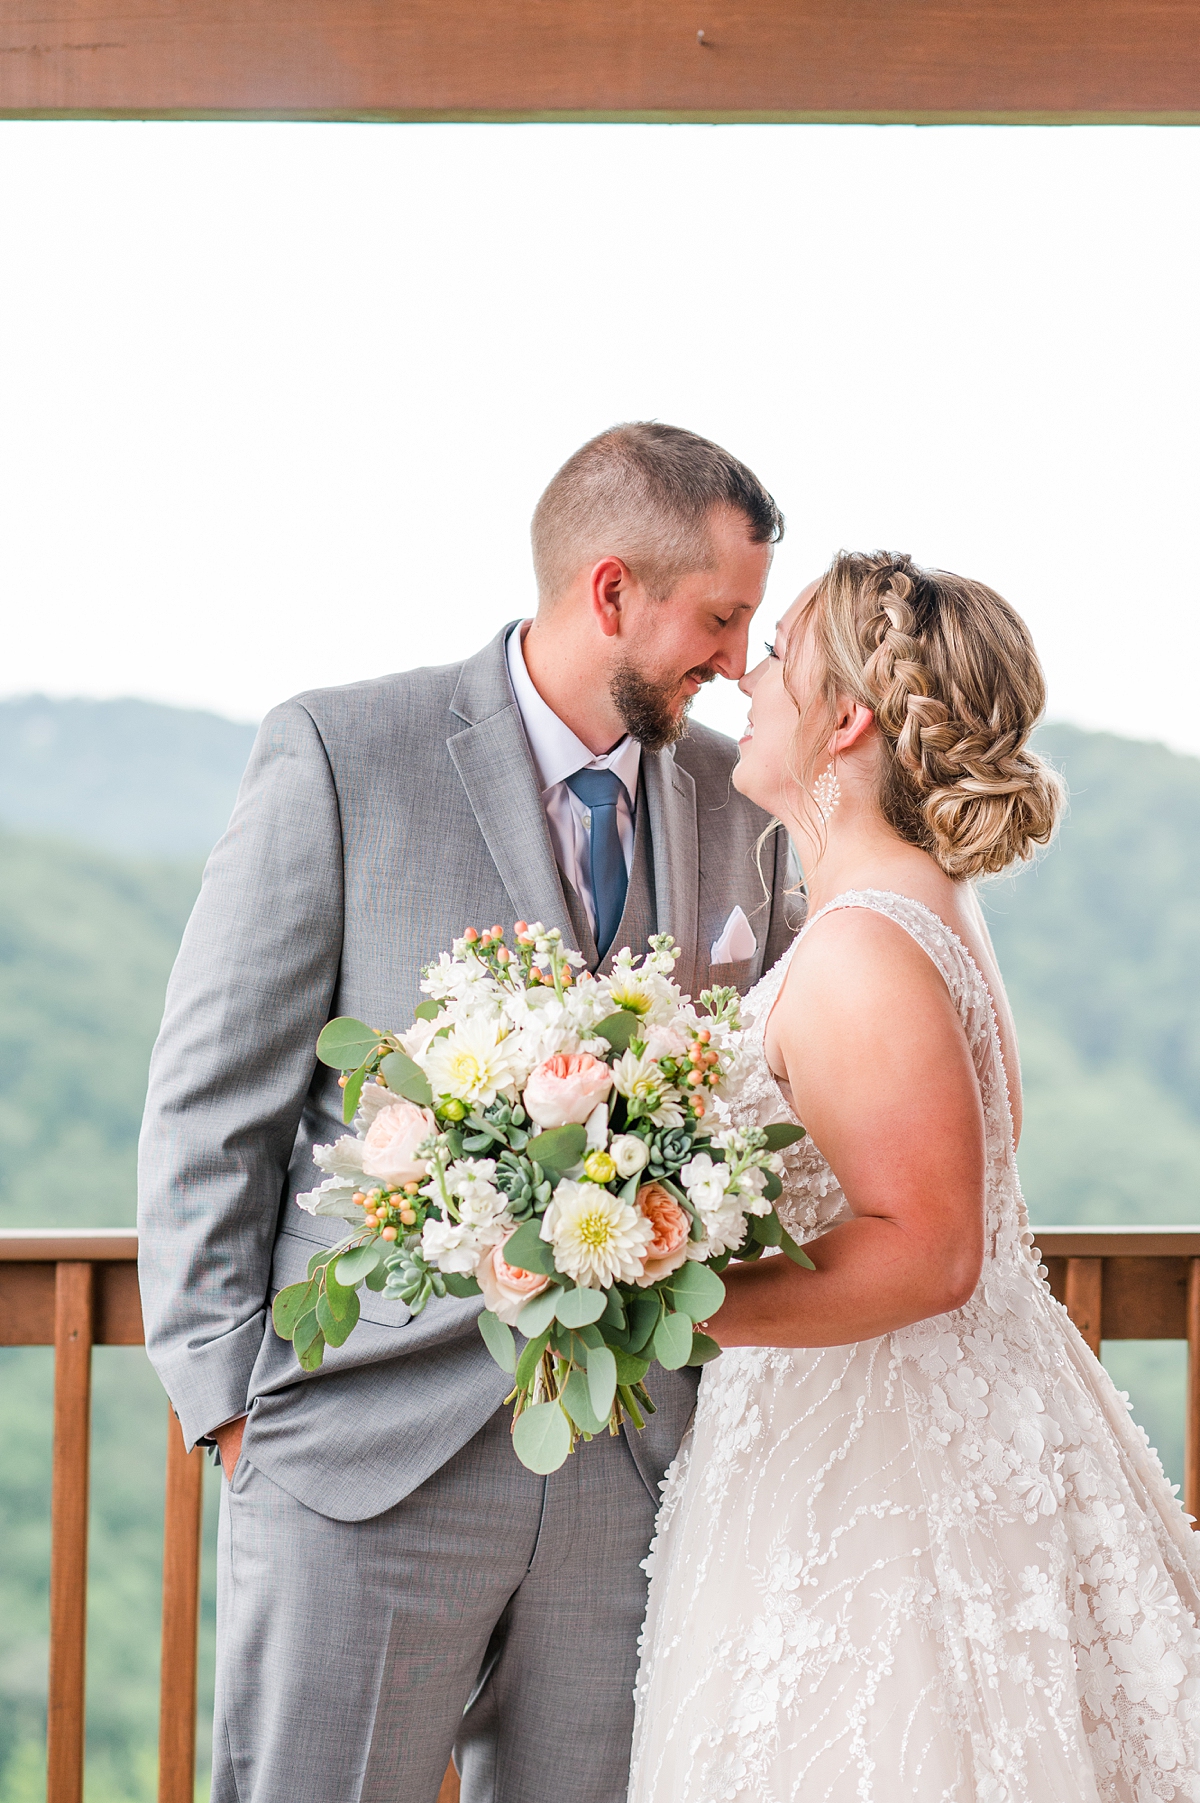 Bride and Groom Portraits at a Summer Magnolia Venue Smoky Mountain Wedding. Virginia Wedding Photographer Kailey Brianne Photography. 